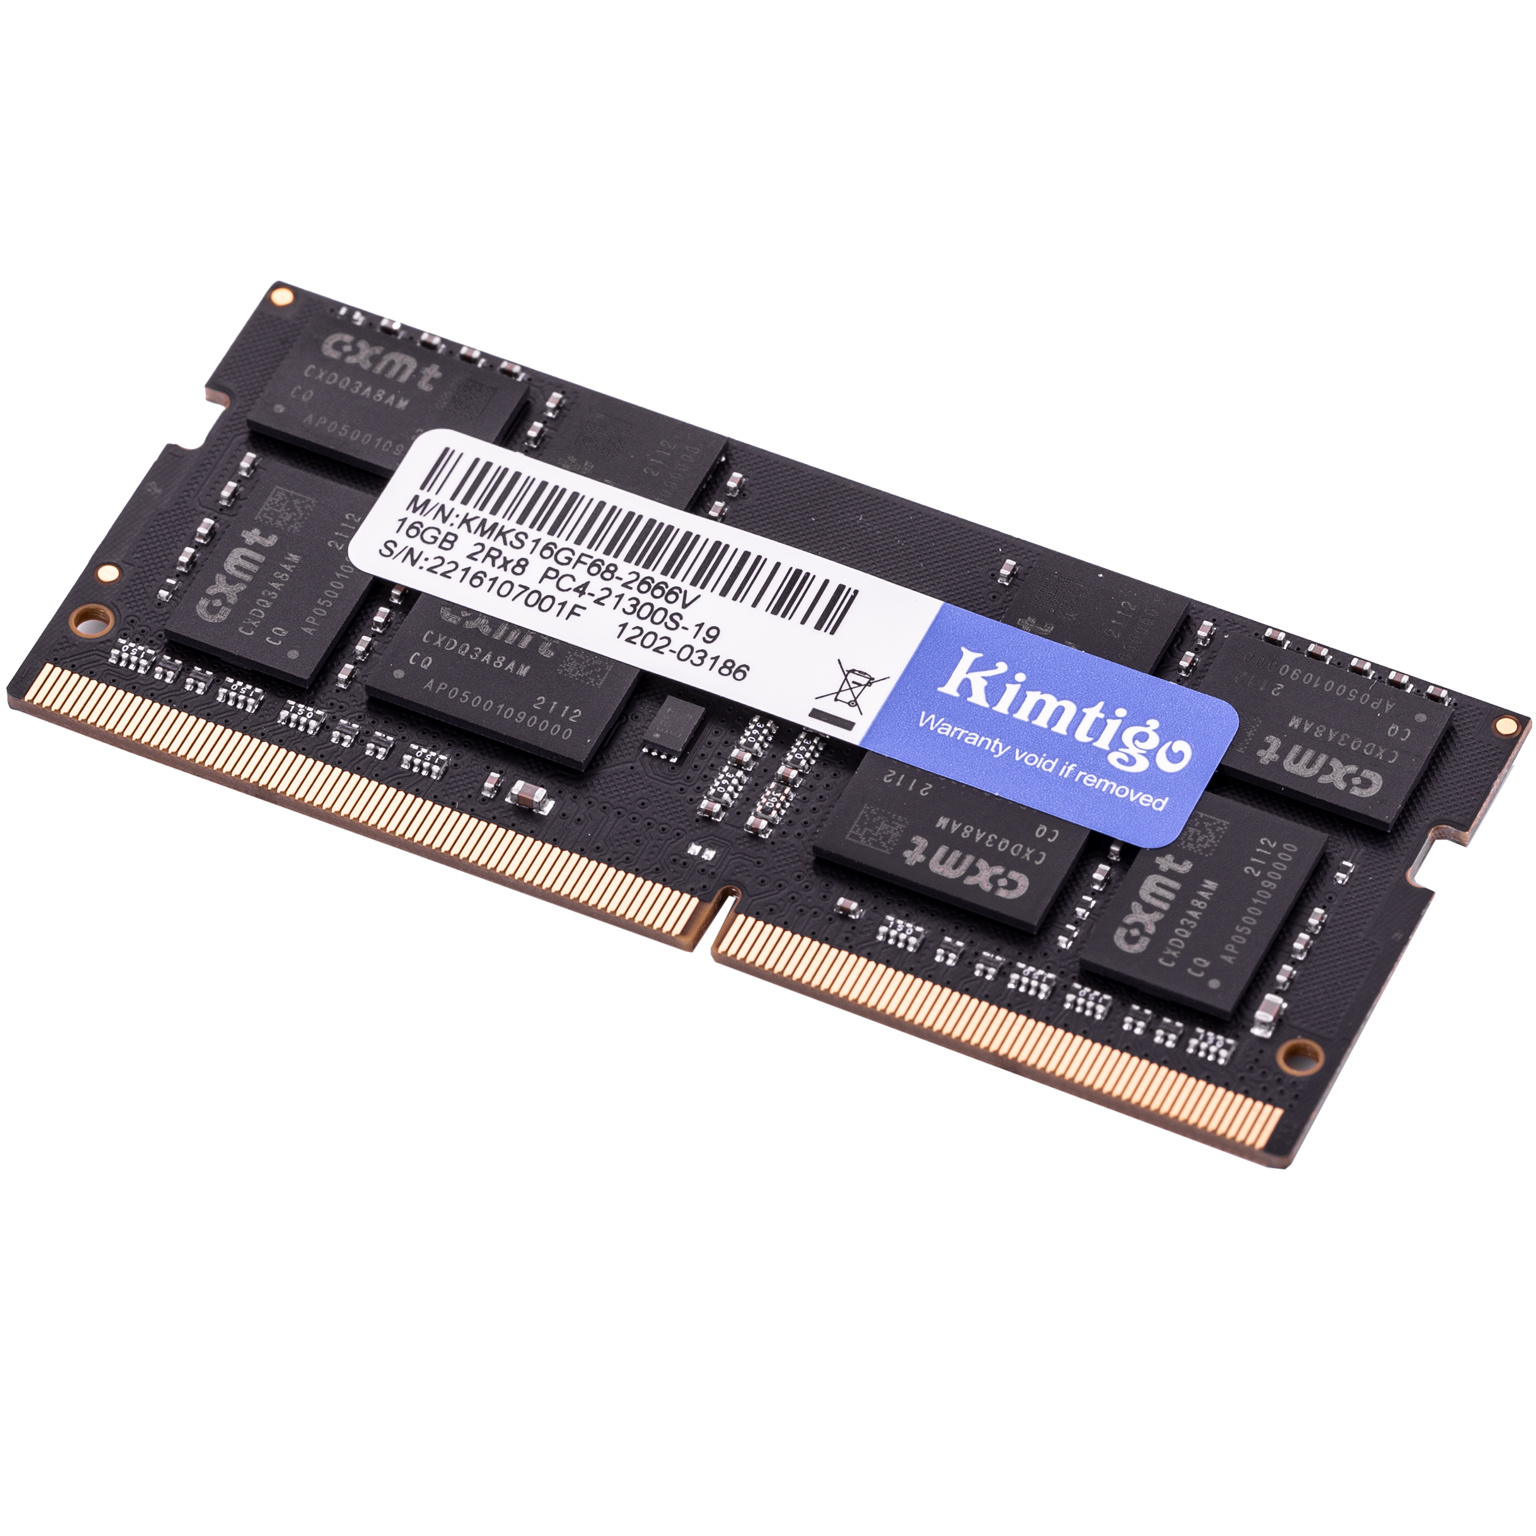 картинка Оперативная память для ноутбука Kimtigo KMKS 3200 8GB, DDR4 SO-DIMM, 8Gb, 3200Mhz, CL17 от магазина itmag.kz